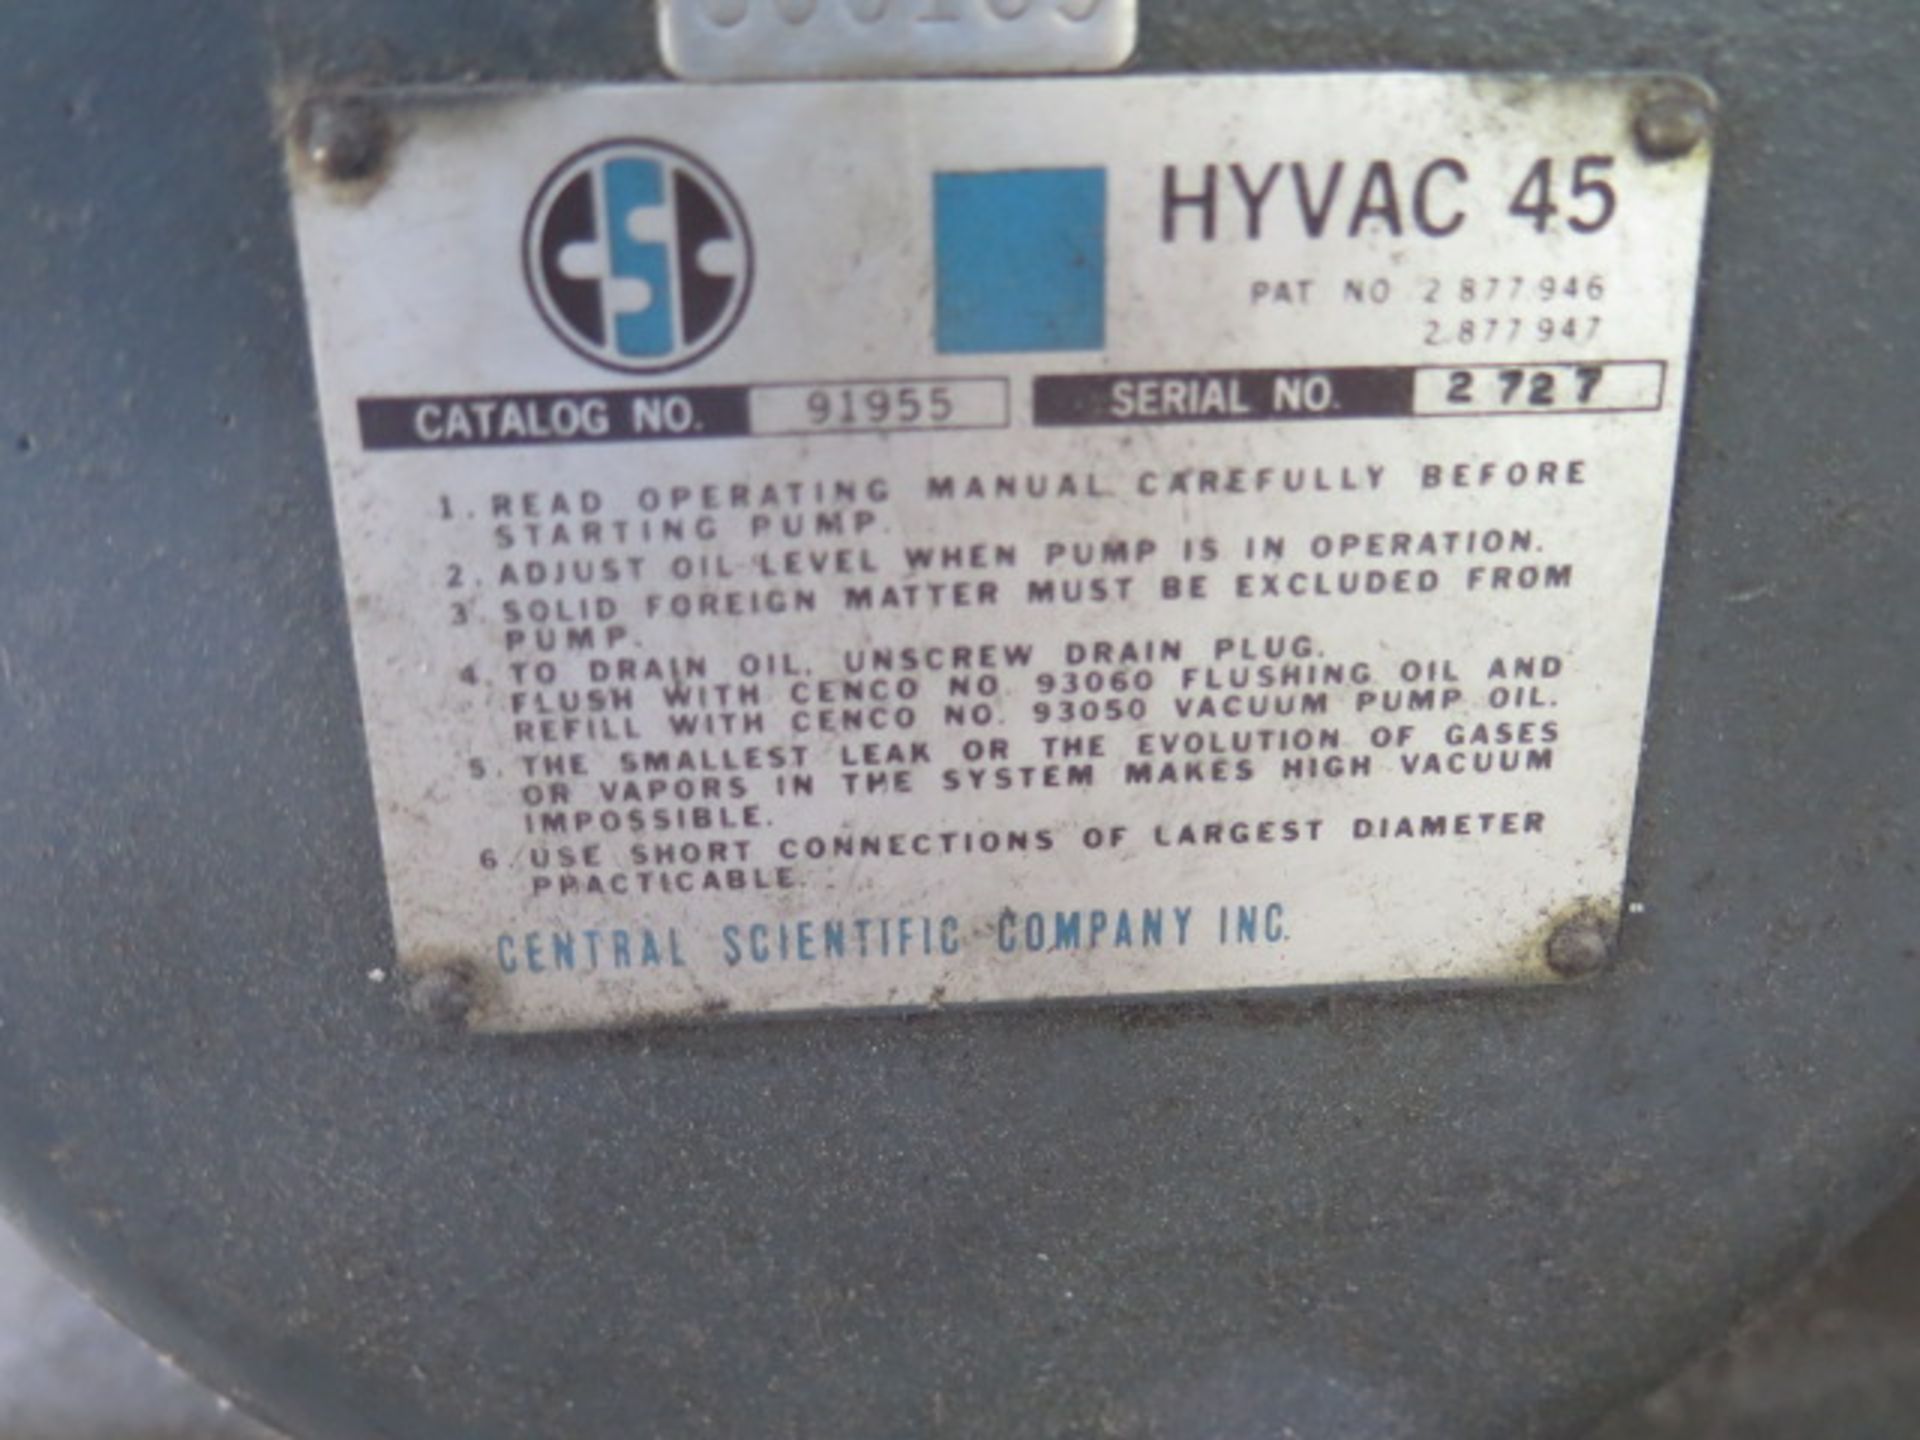 Central Scientific "Hyvac 45" Vacuum Pump s/n 2727 (SOLD AS-IS - NO WARRANTY) - Image 4 of 4